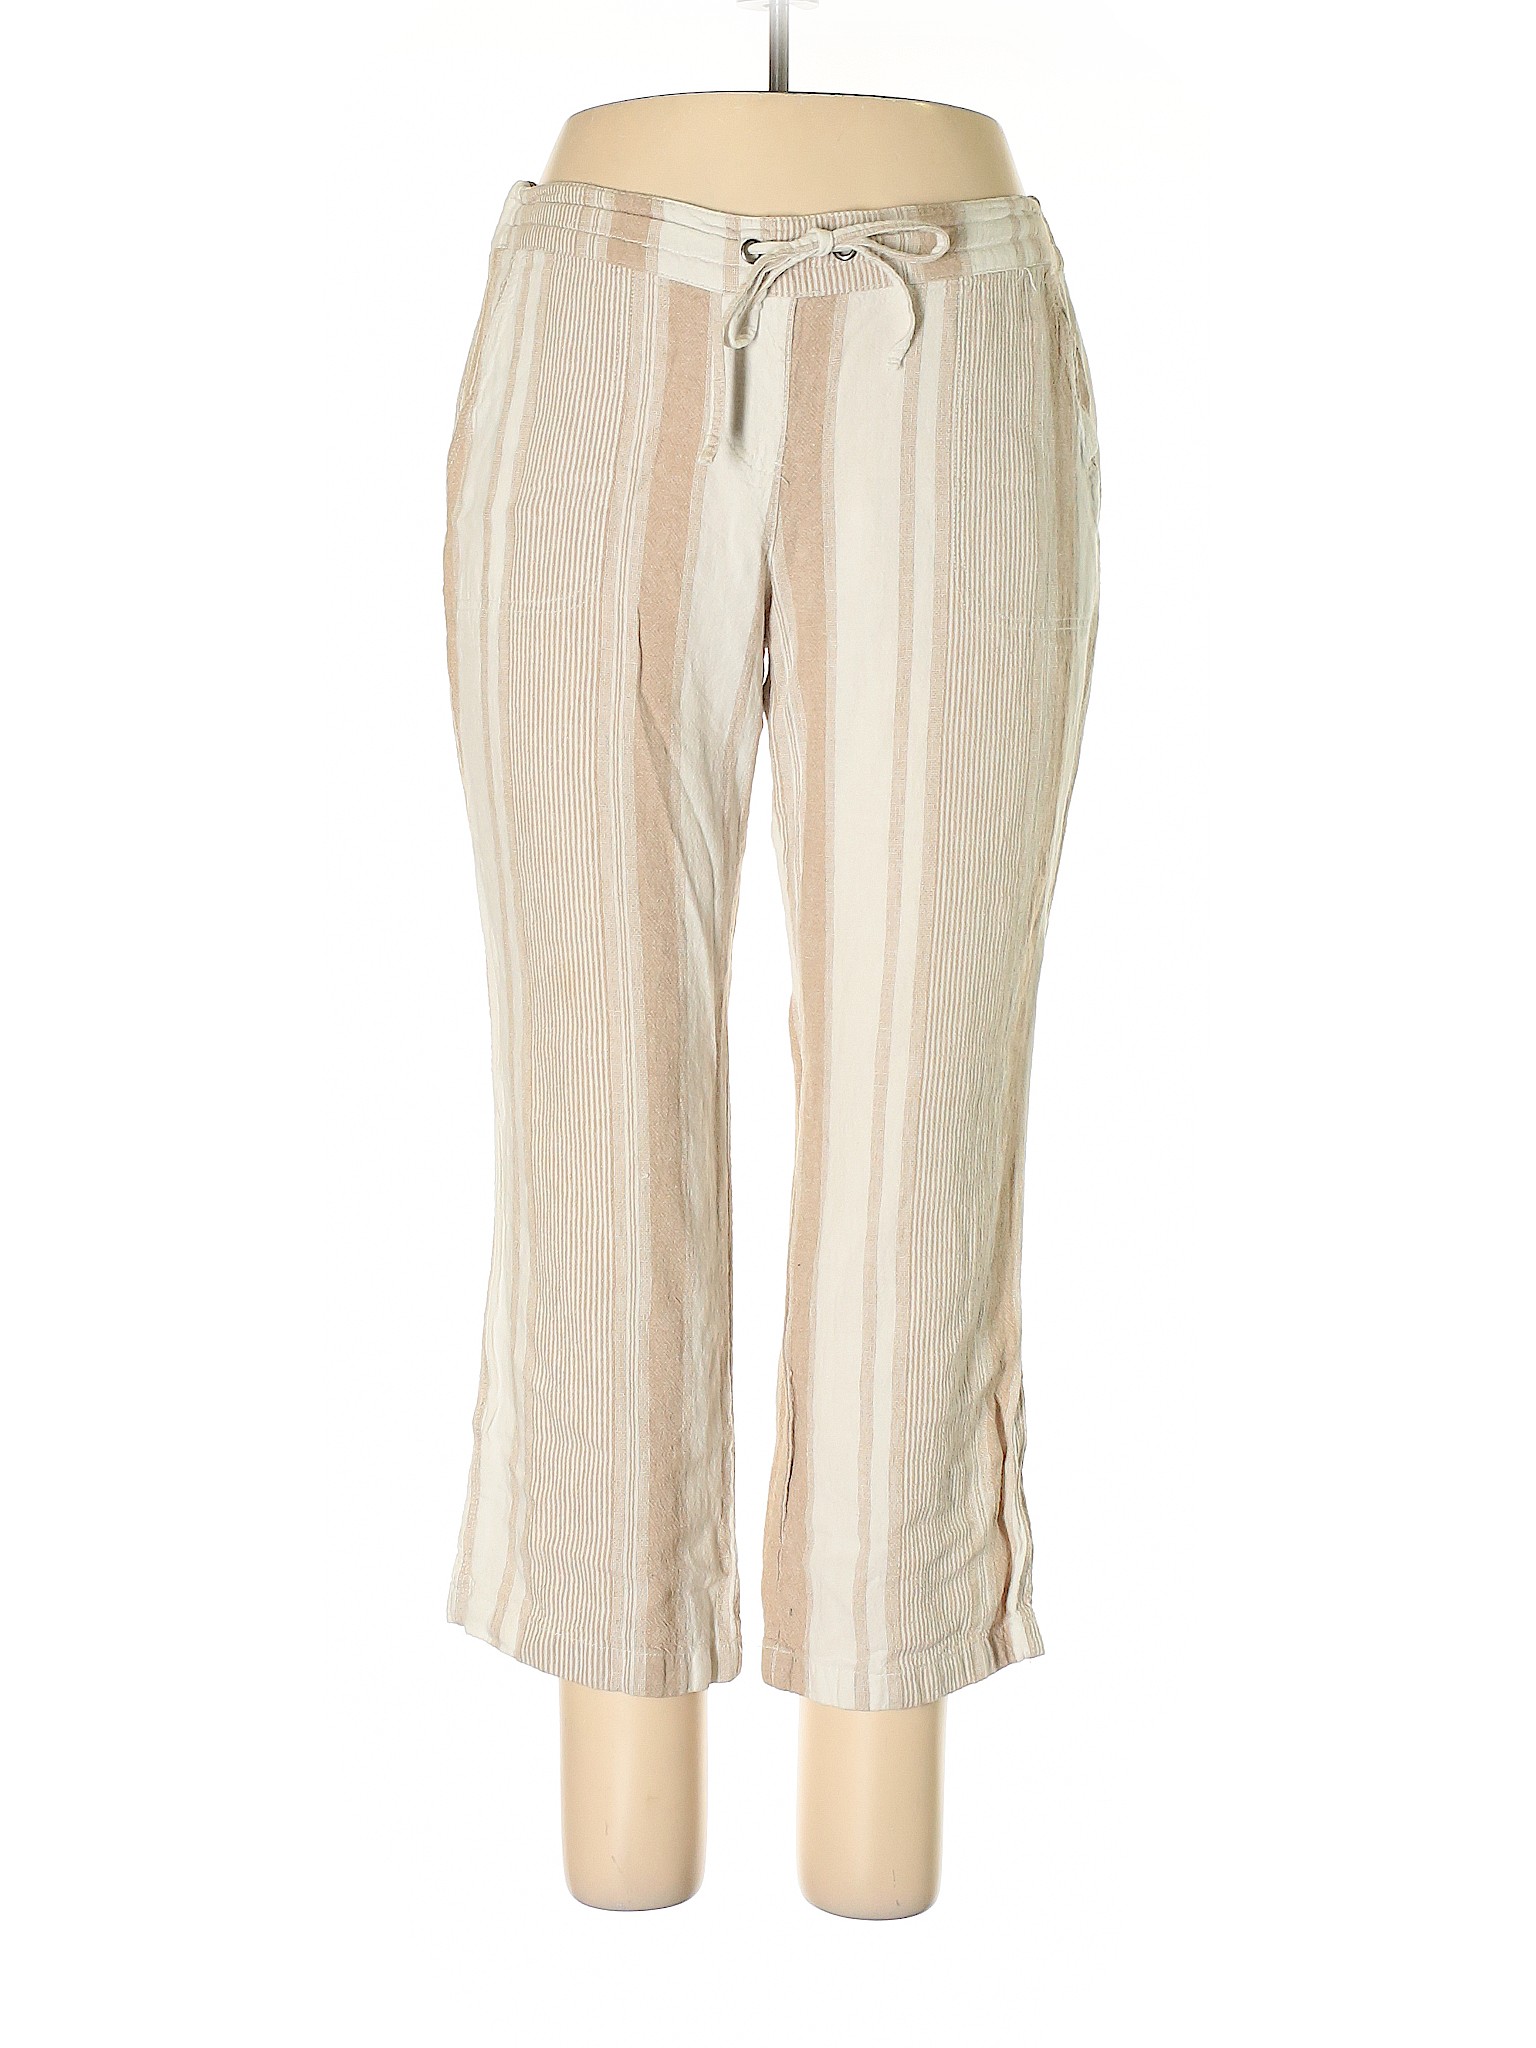 Per Se Women Ivory Linen Pants L Petites | eBay